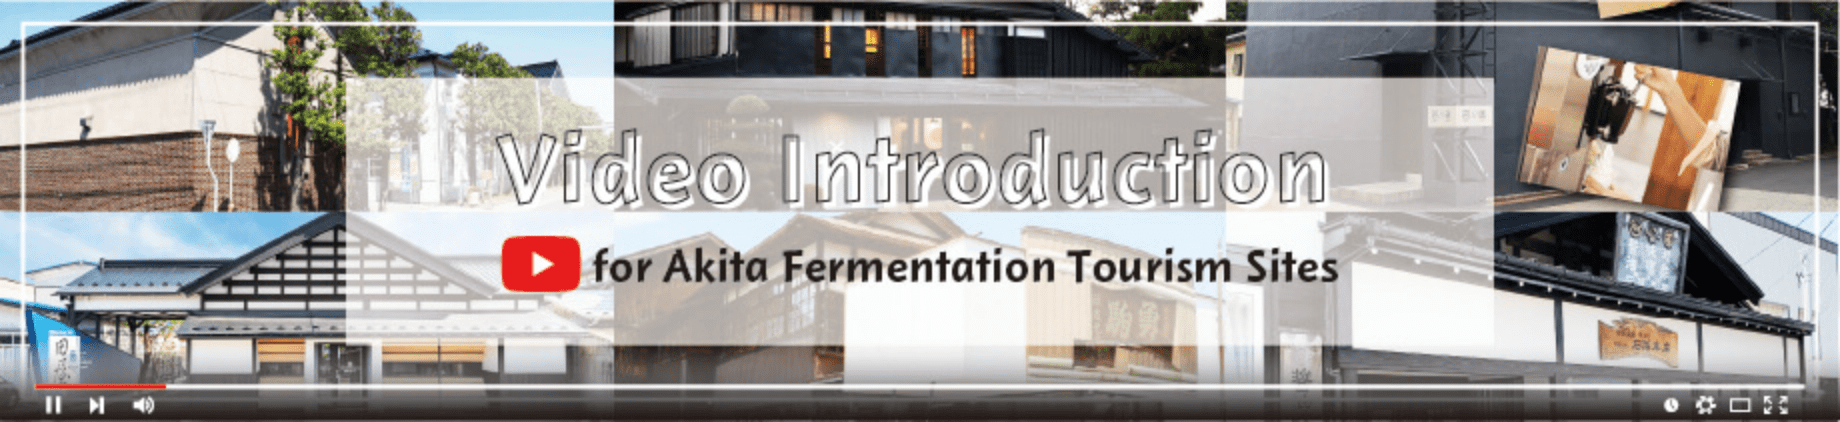 Video introduction for Akita Fermentation Tourism Sites